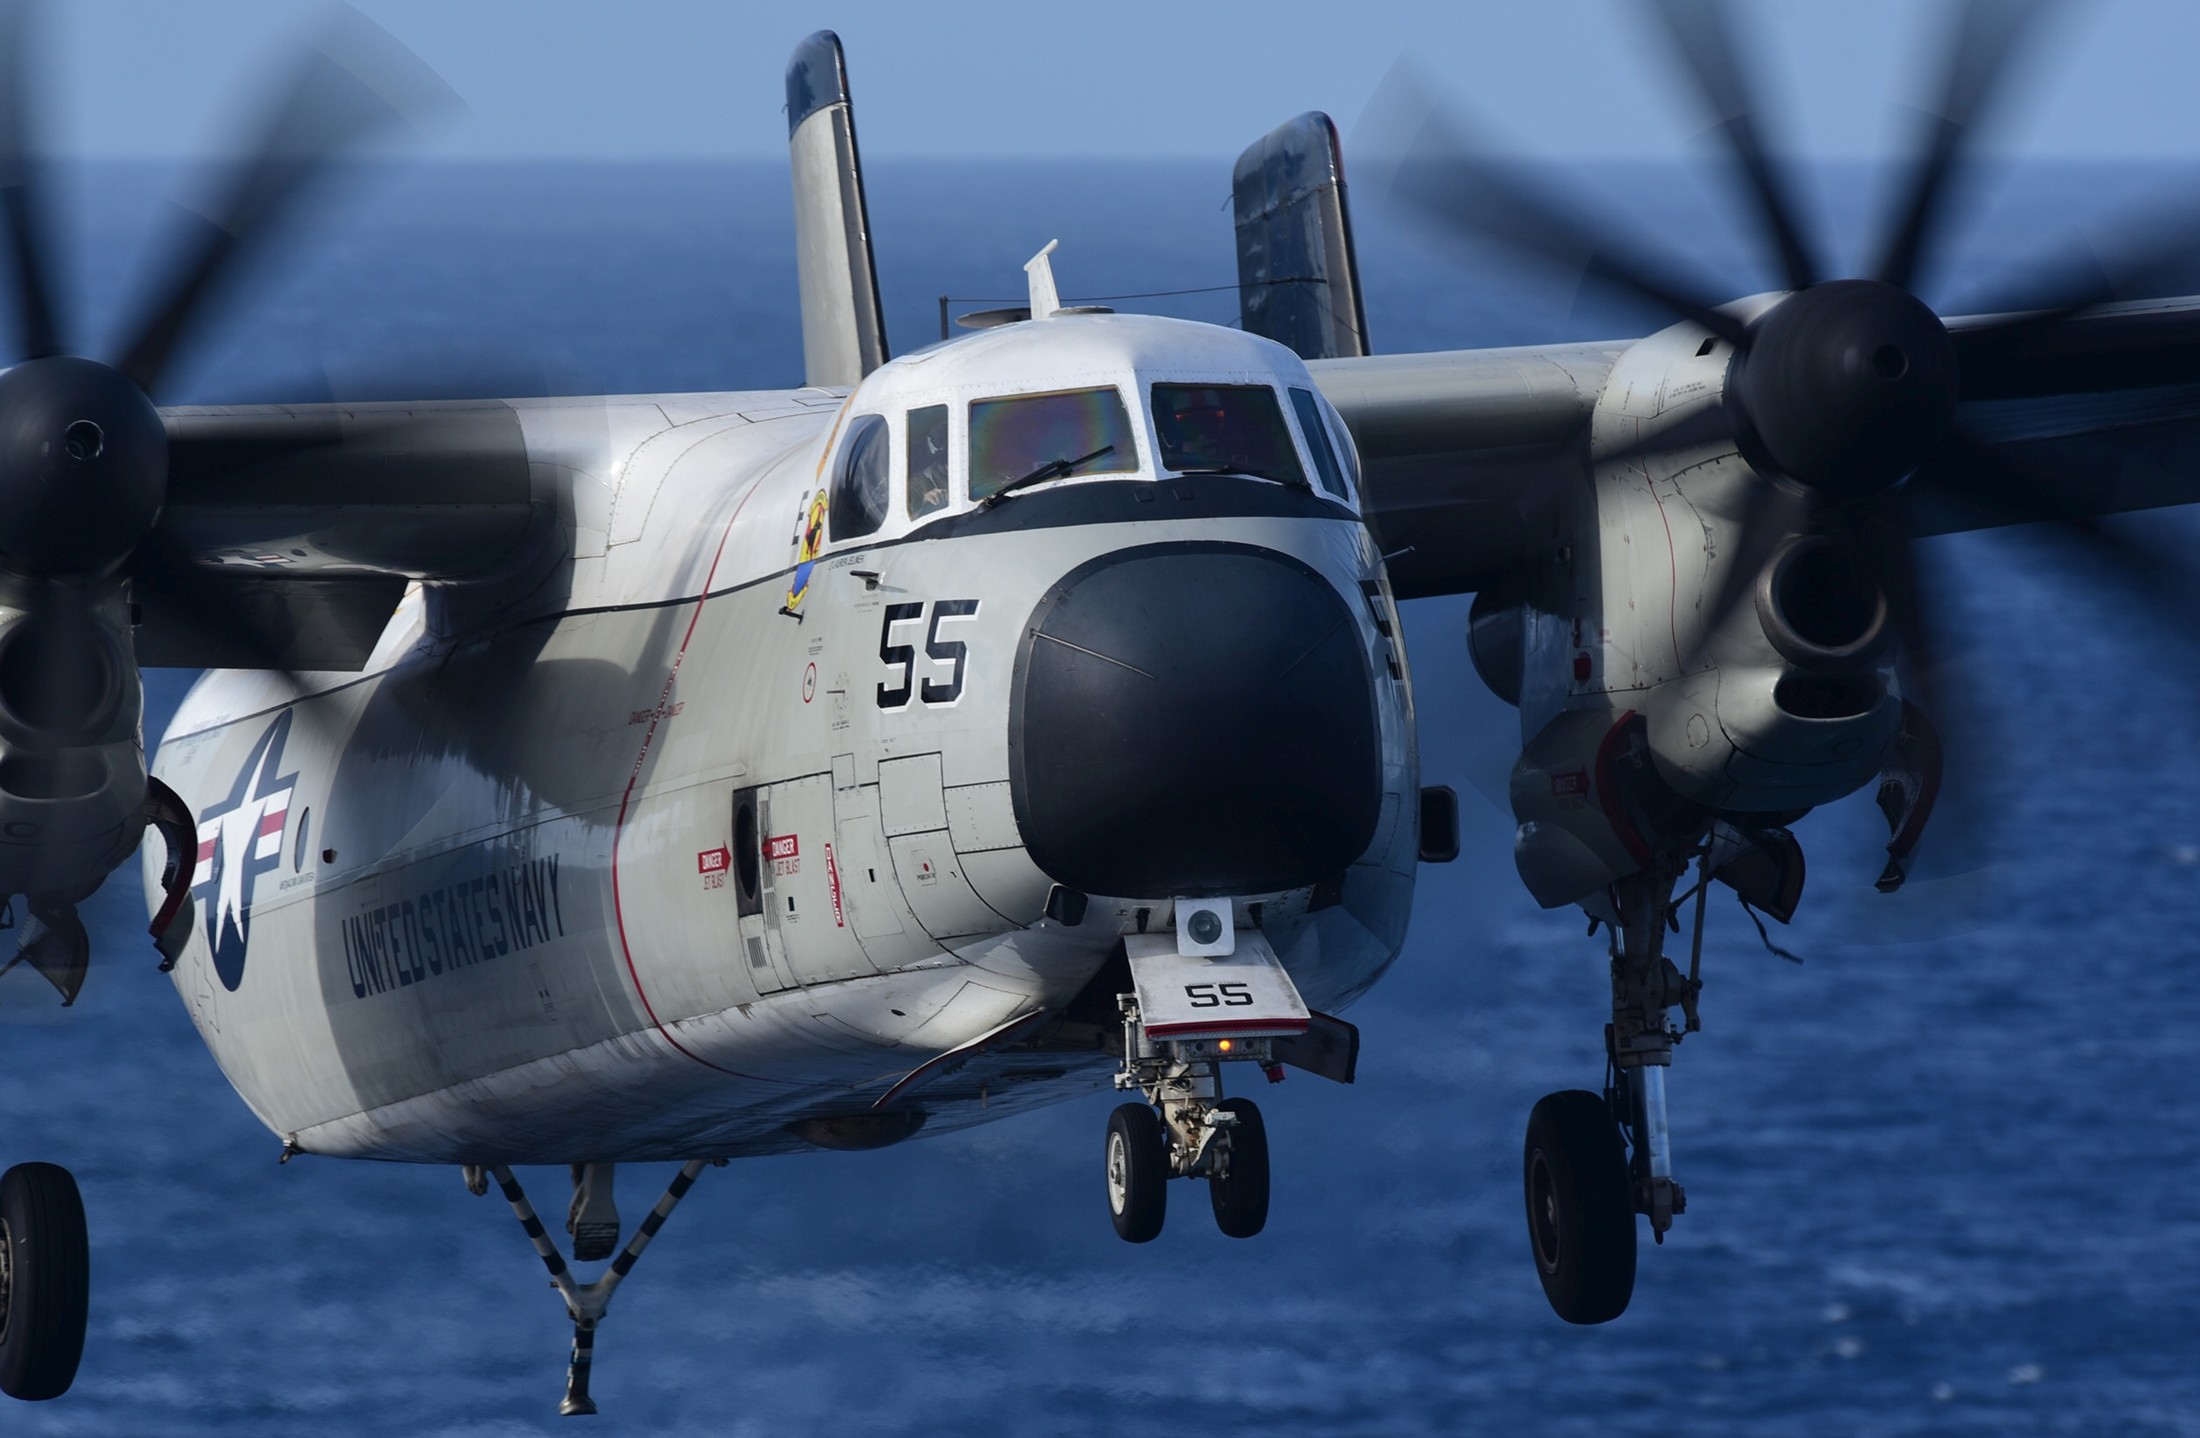 vrc-40 rawhides fleet logistics support squadron flelogsupron us navy grumman c-2a greyhound uss harry s. truman cvn-75 74